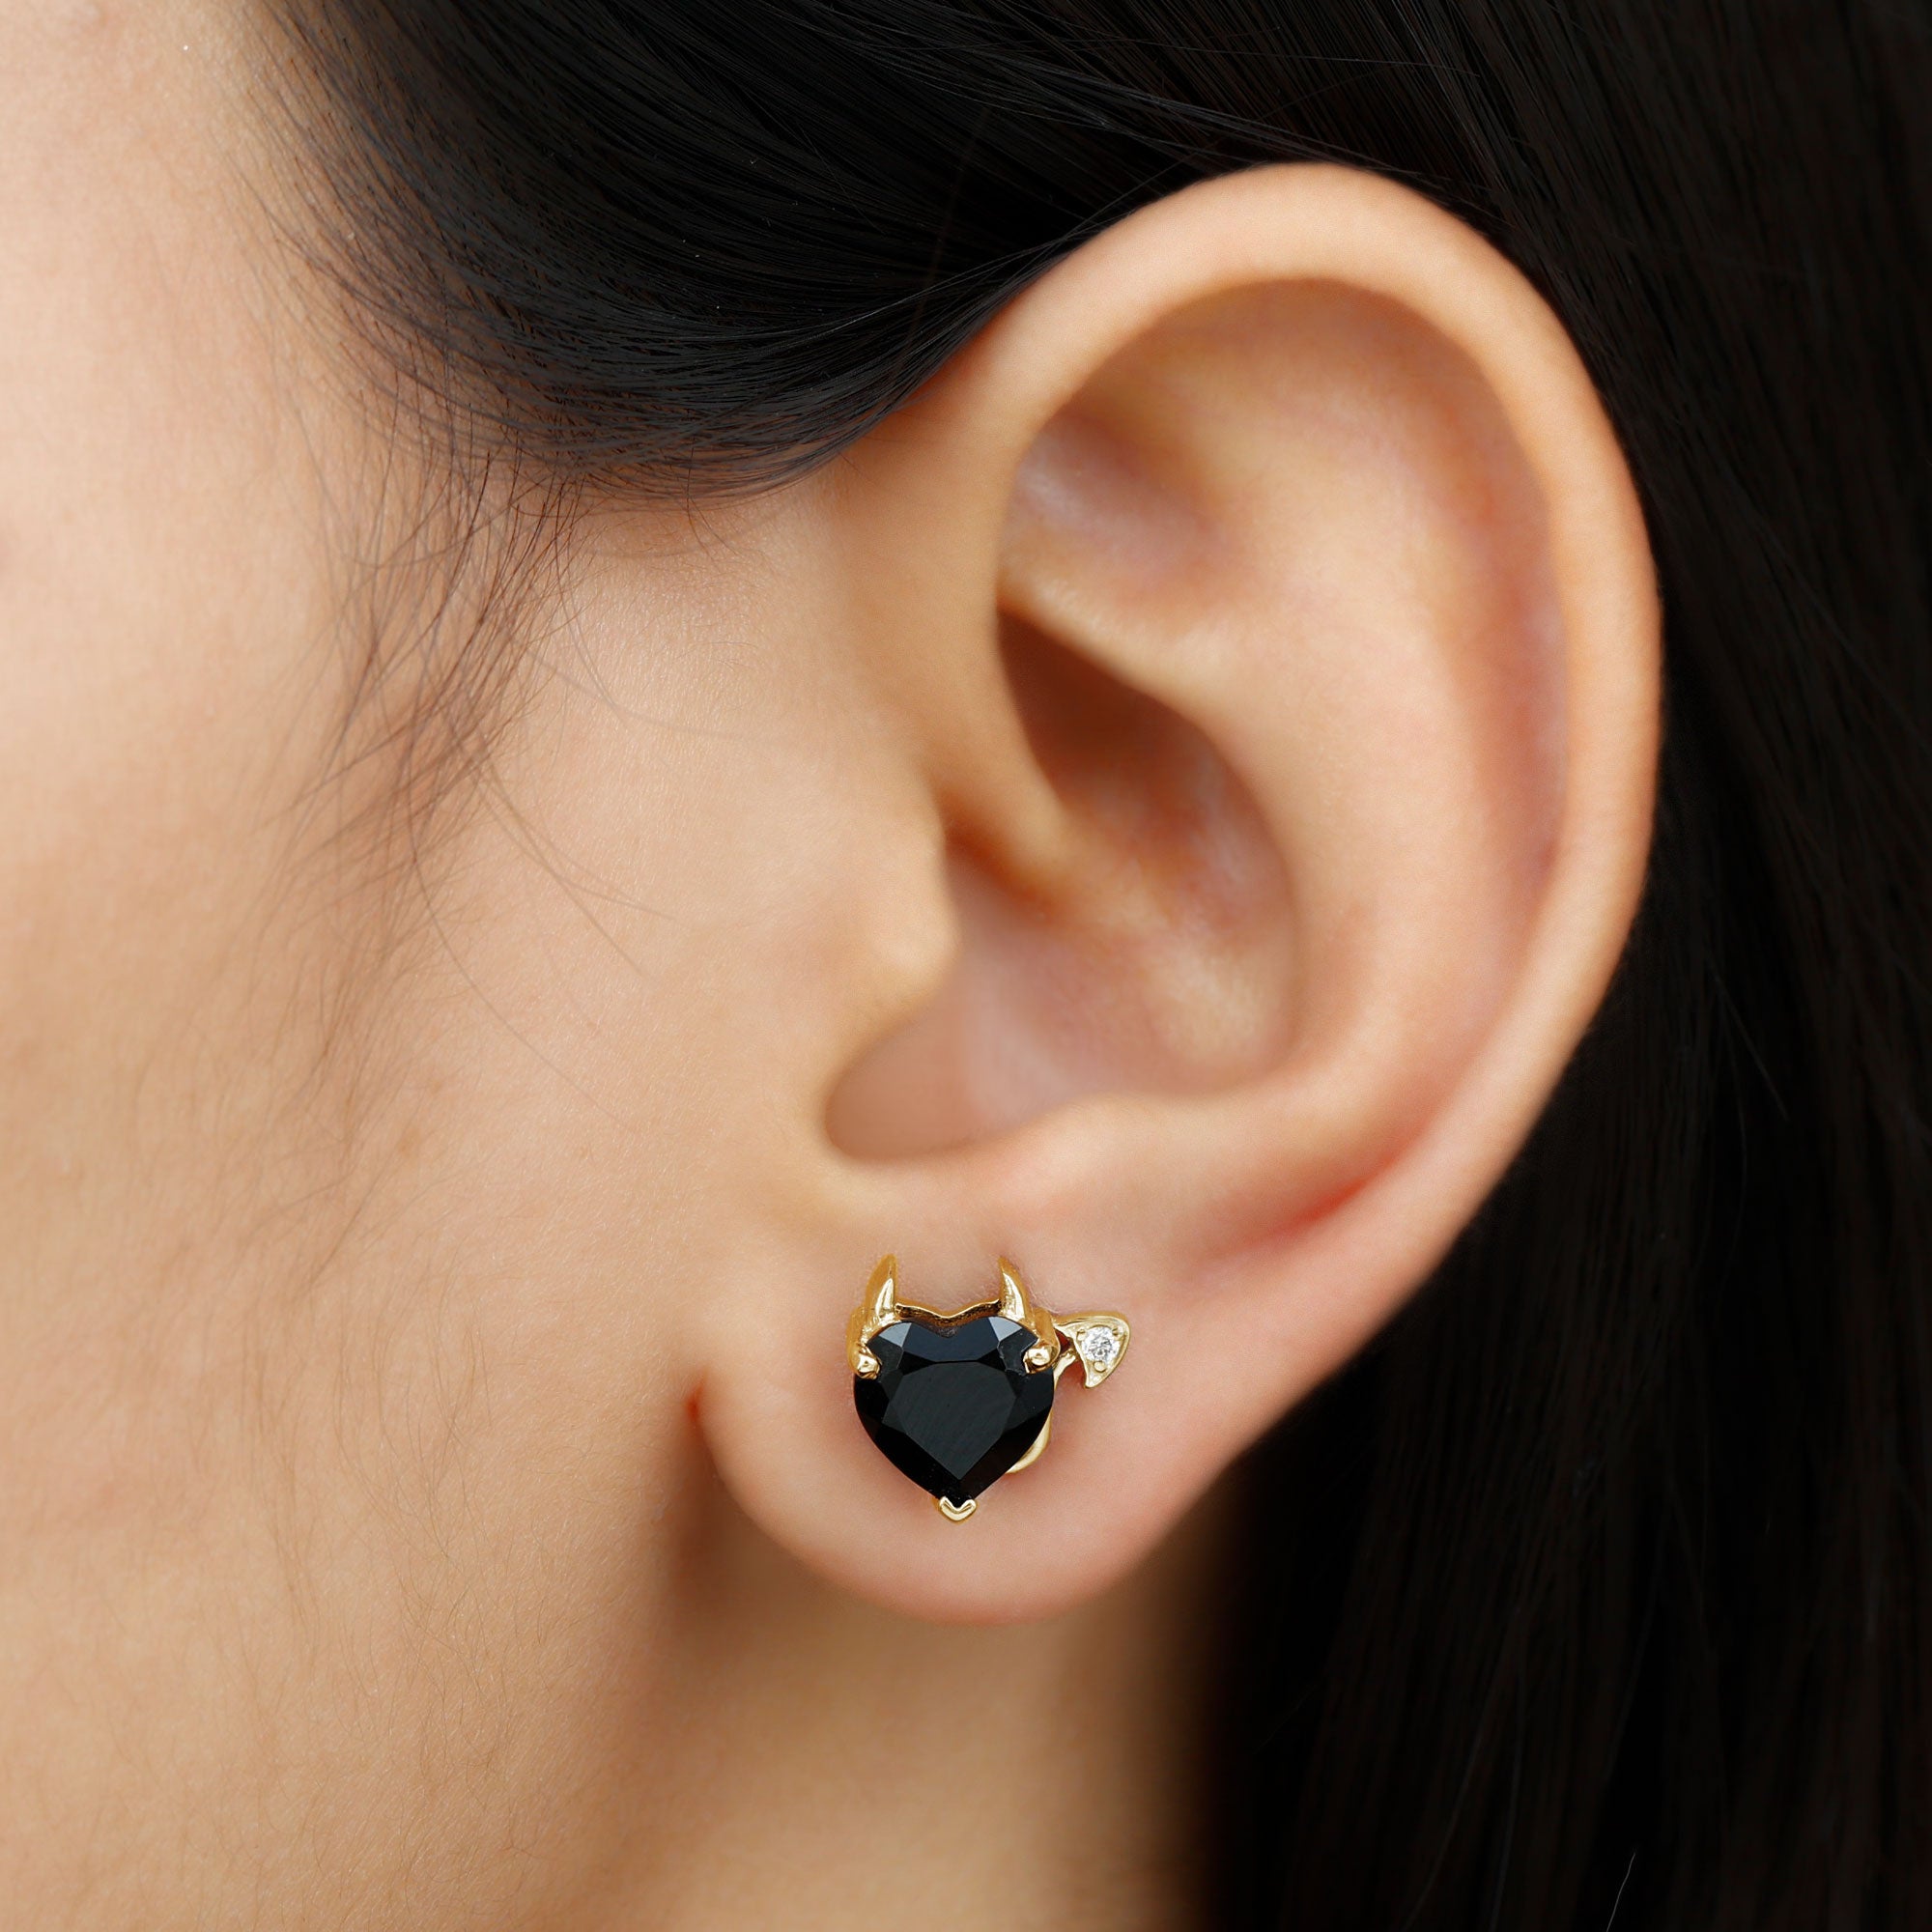 Heart Shape Lab Grown Black Diamond Gothic Stud Earrings with Diamond Lab Created Black Diamond - ( AAAA ) - Quality - Rosec Jewels